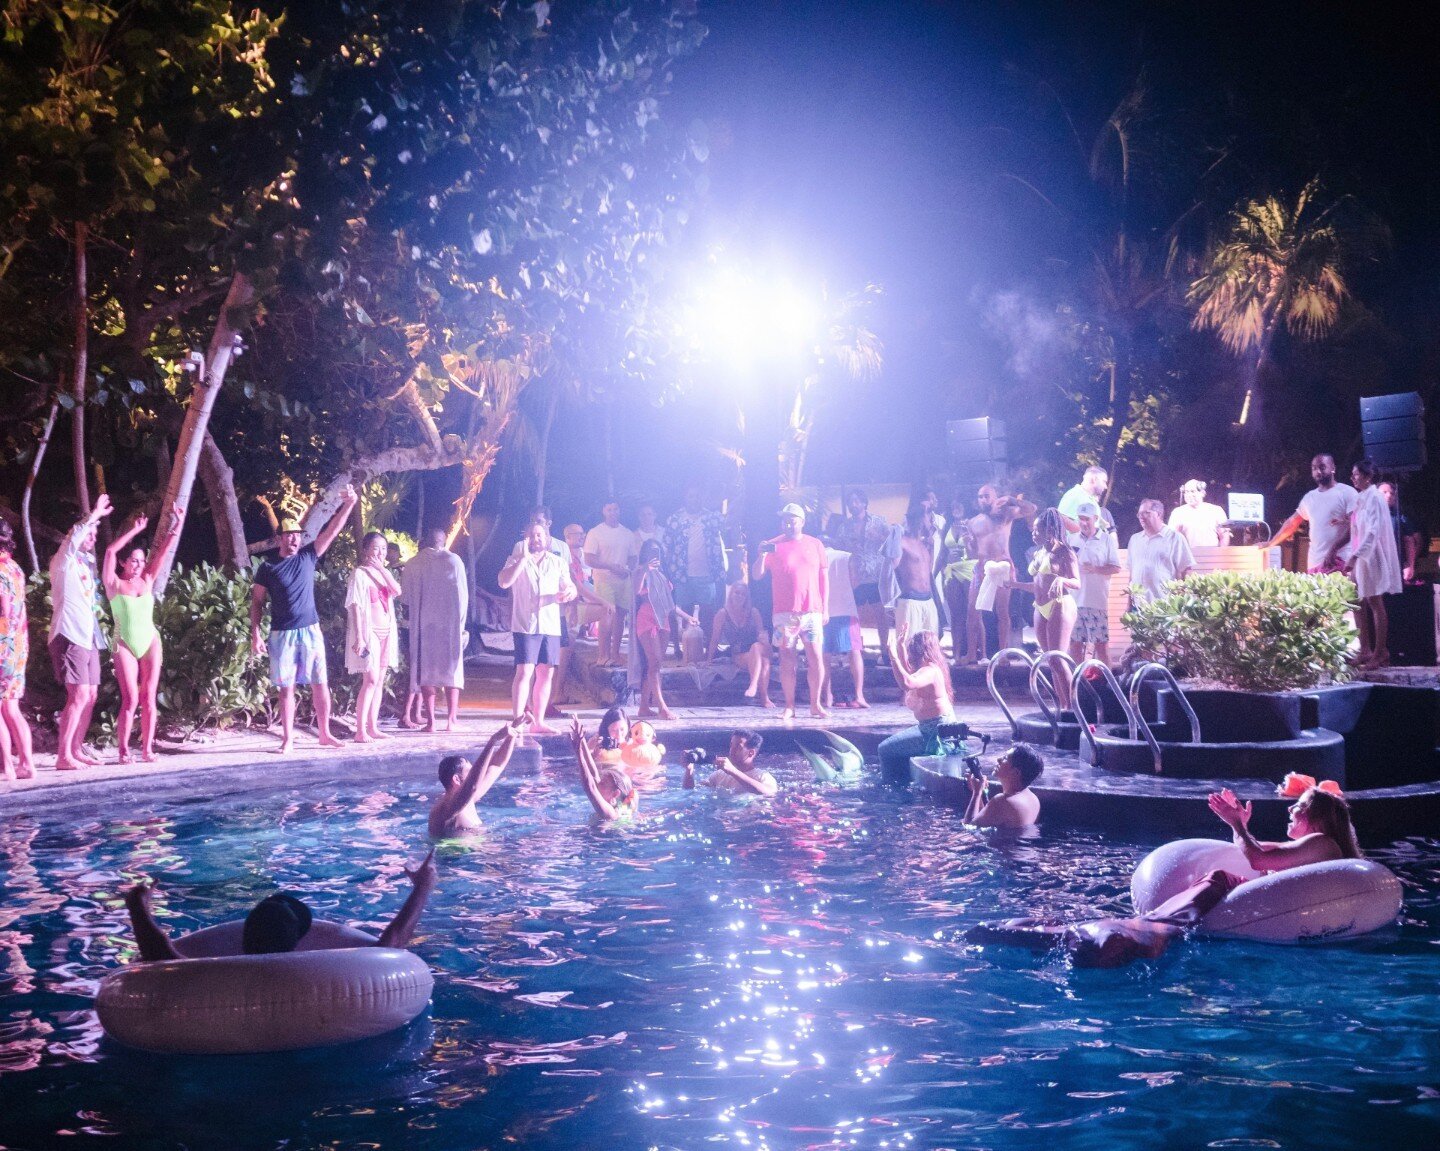 It's not just a pool party... it's a ✨ Rave in a Cave ✨

Creative Director: @elizabethpriyakumar
Planner: @preminievents @danielletlampron
Decor: @bircheventdesign @vikramdesign
Bride &amp; Groom: @jamie_joseph @rashimhoberoi
Caterer: @chef.anand @cg